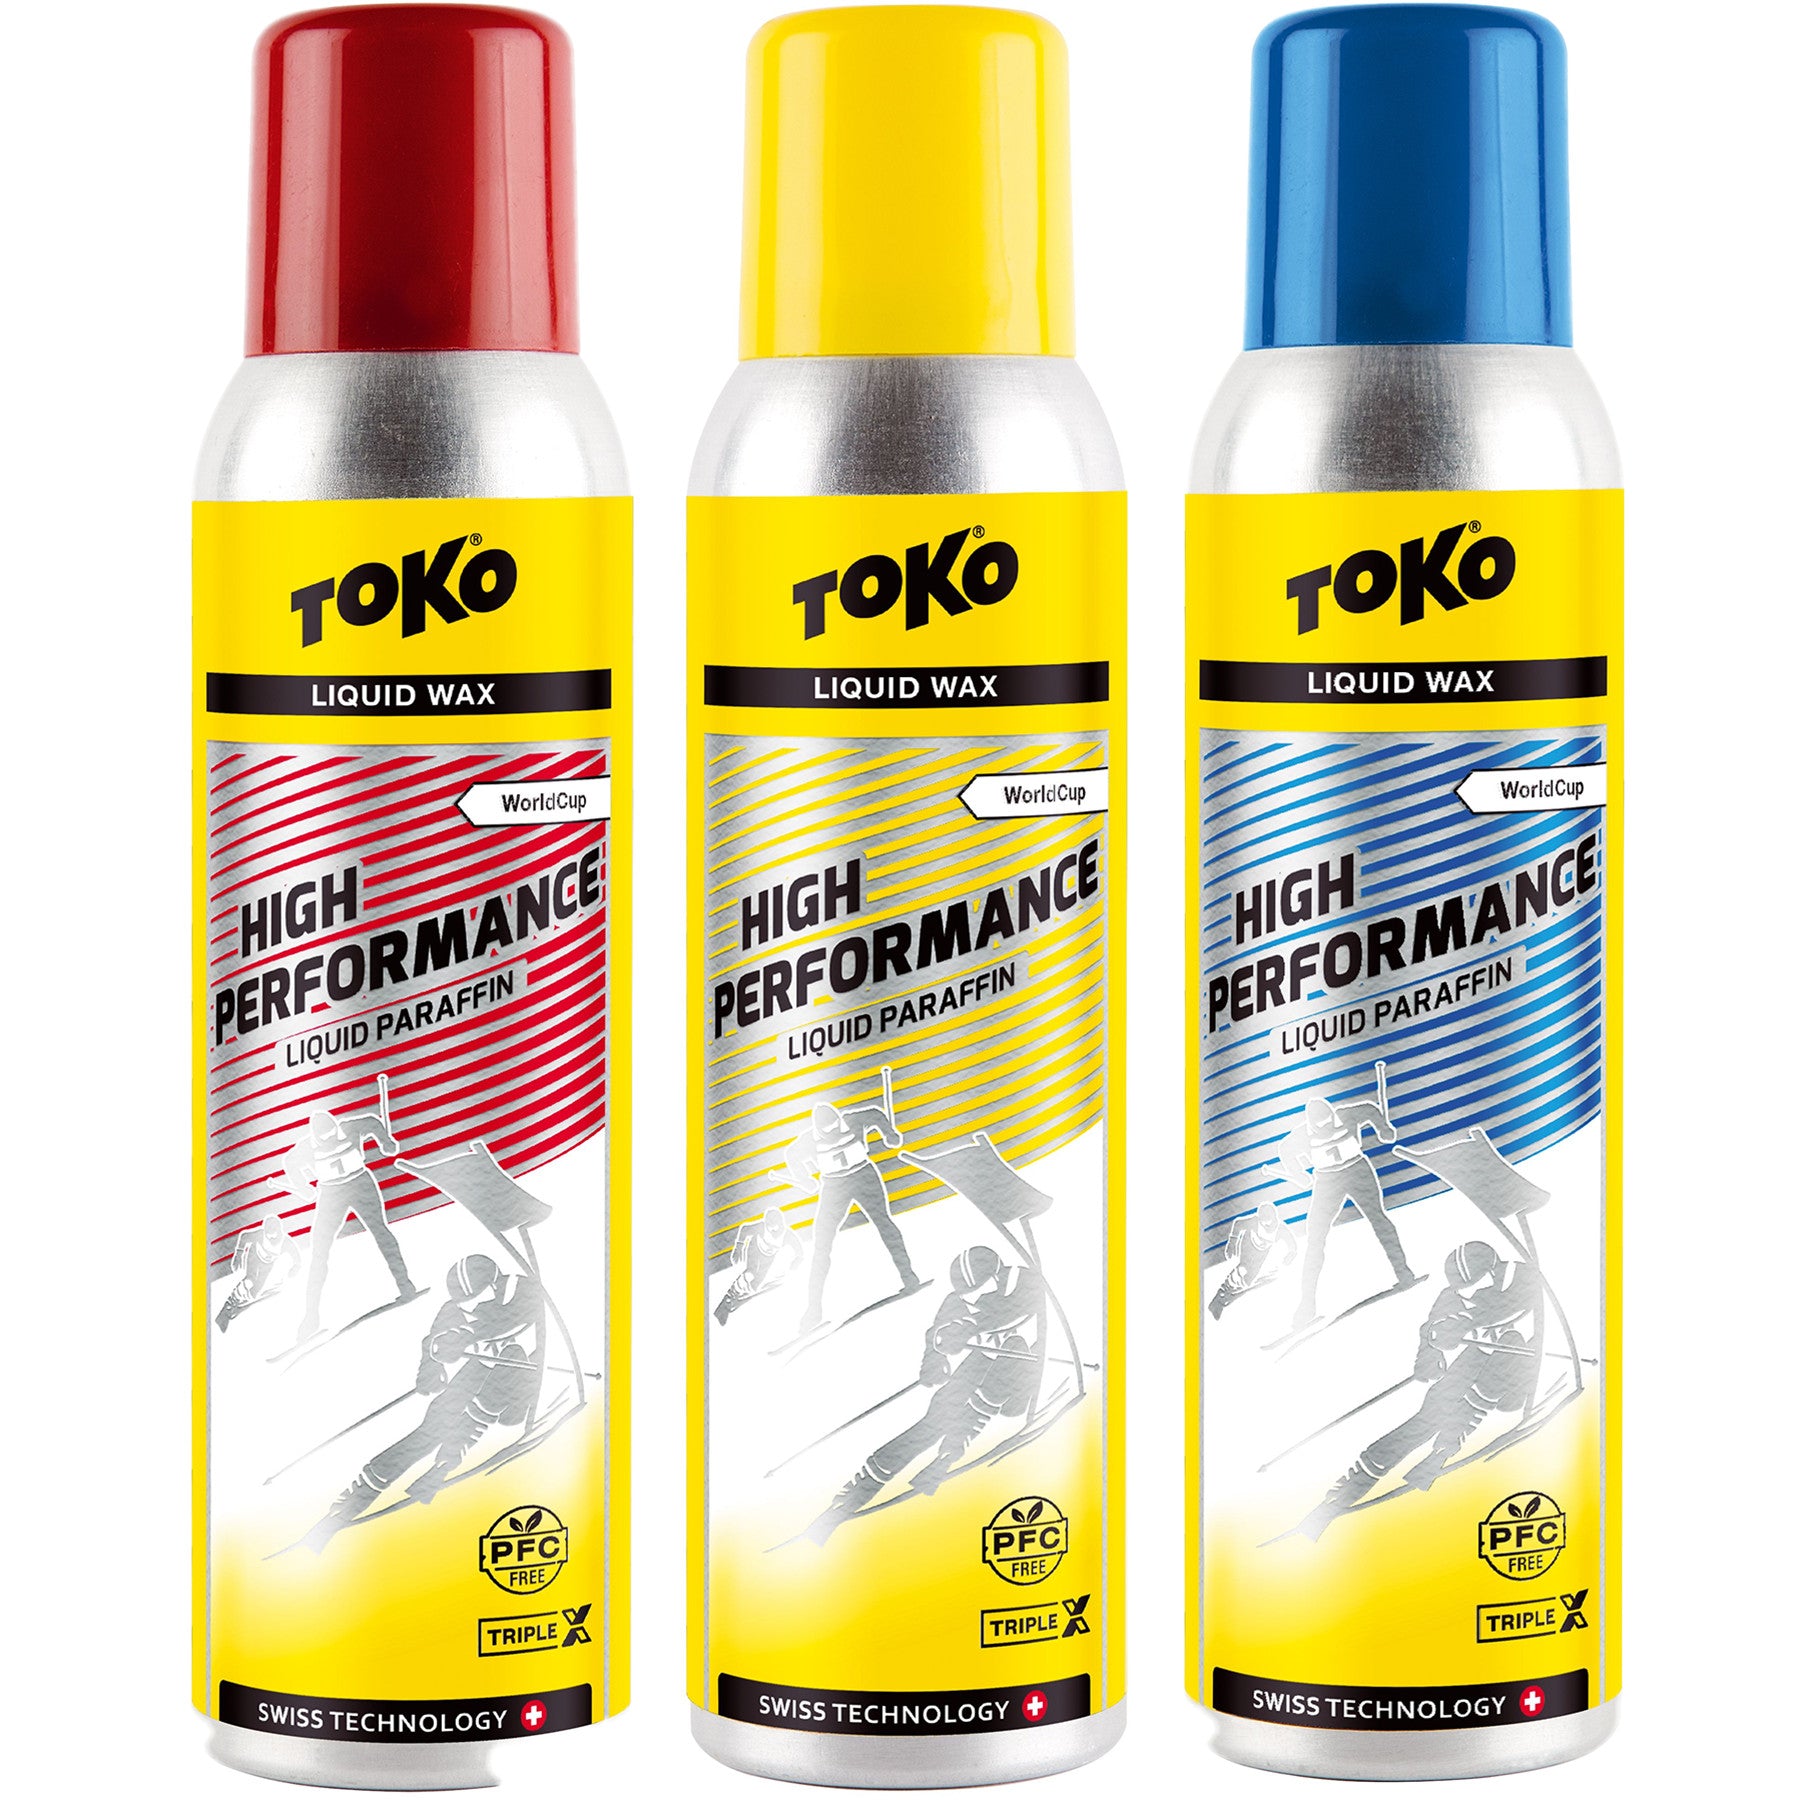 Toko High Performance Liquid Glide Wax 125ml